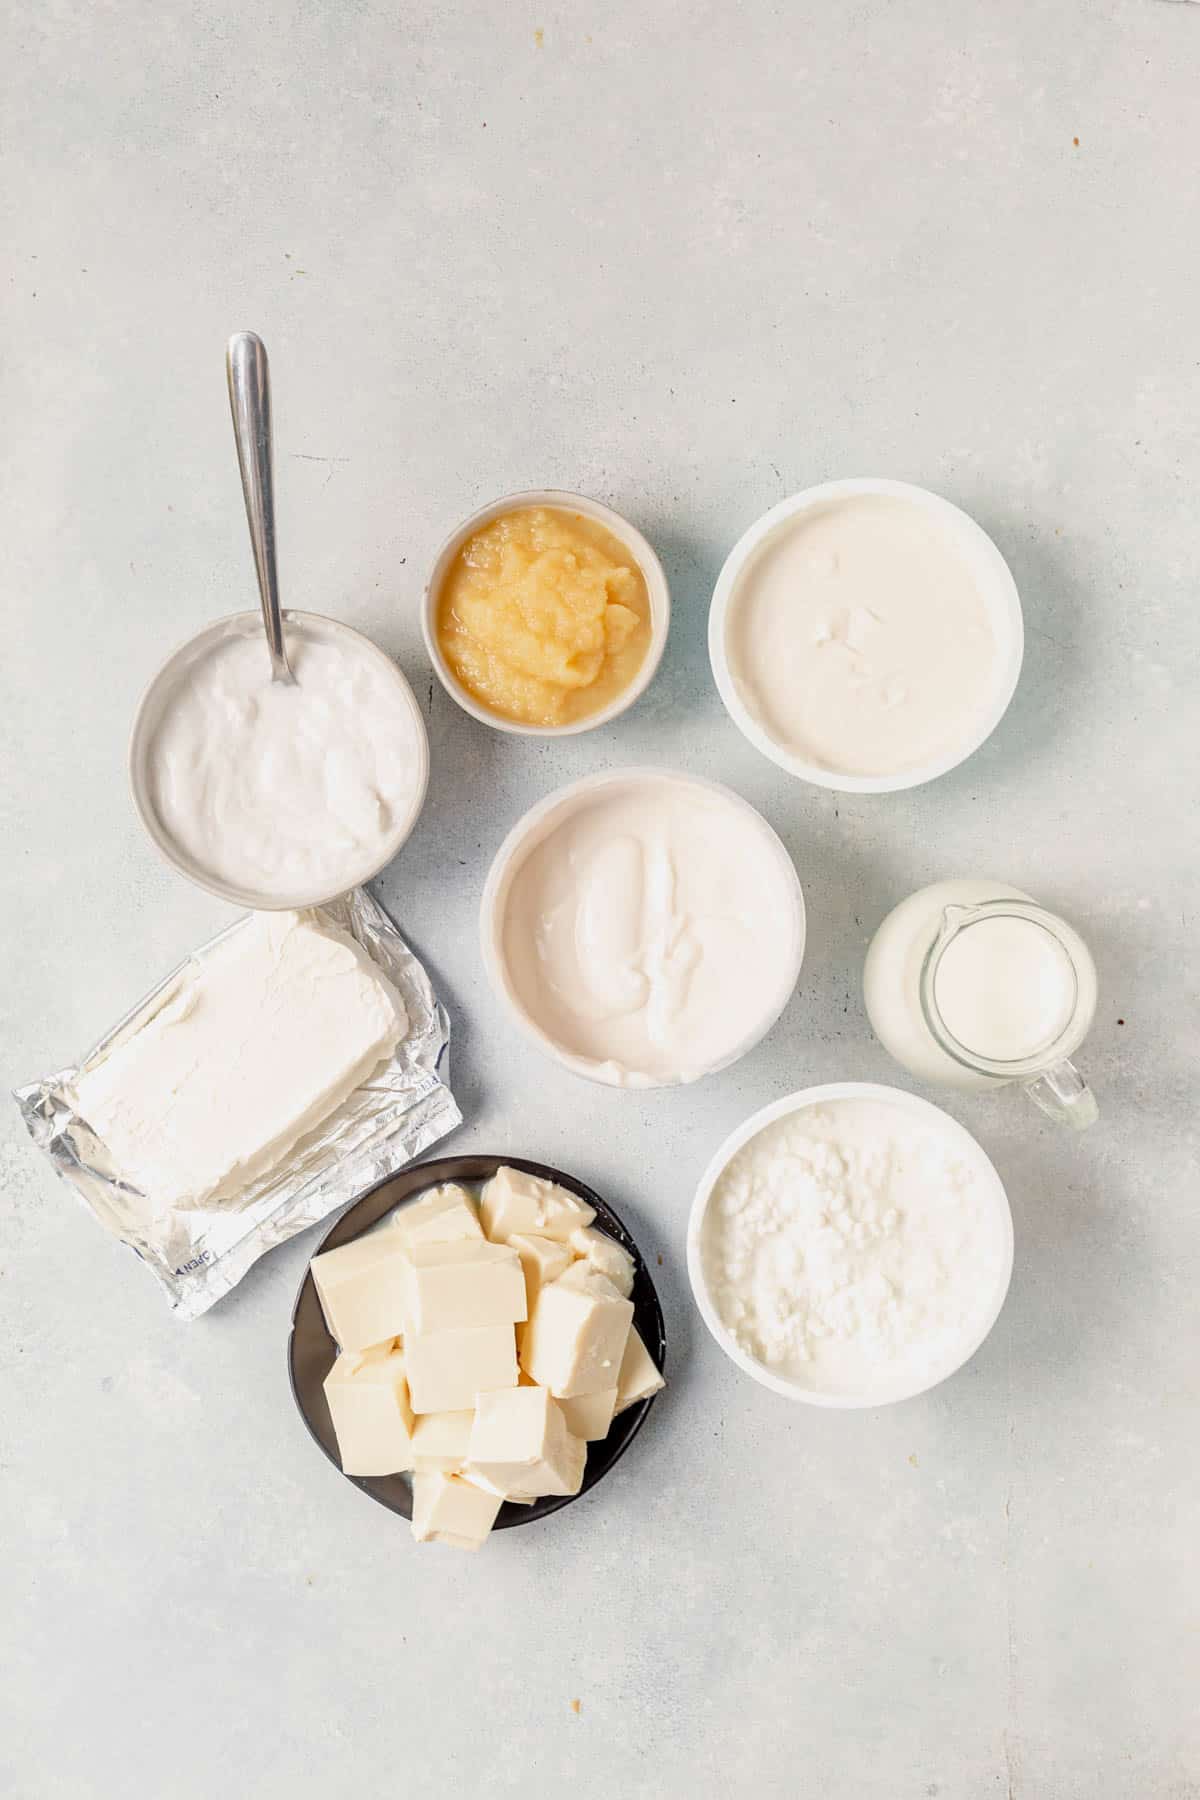 substitutes for yogurt in baking